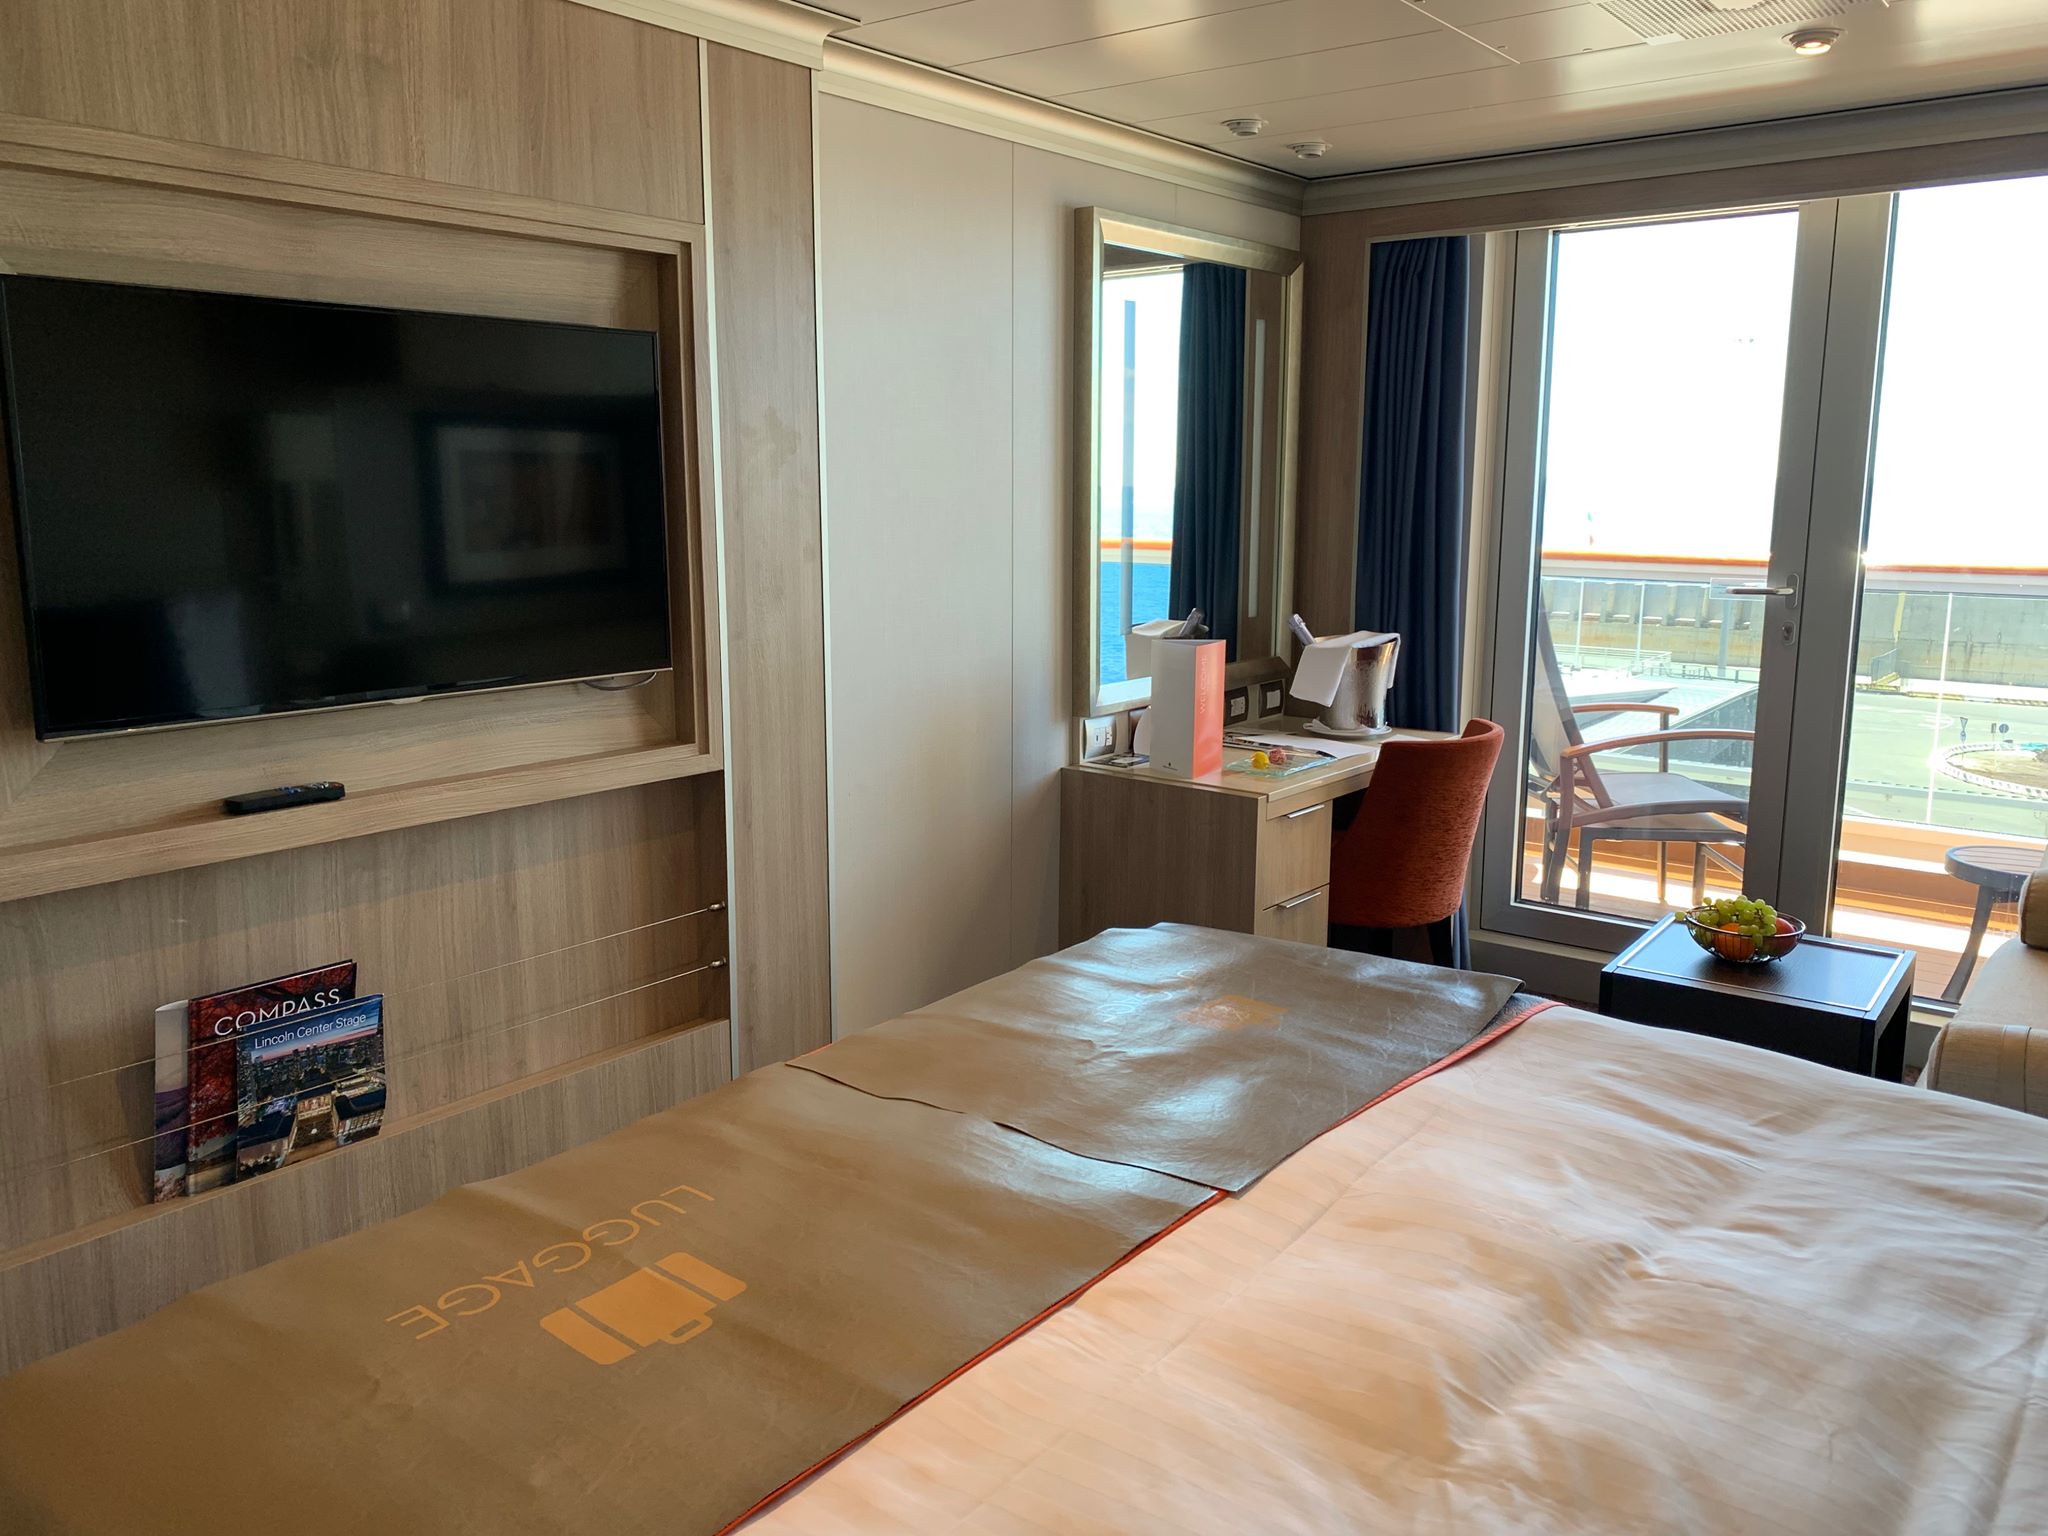 Holland American Mediterranean Cruise stateroom